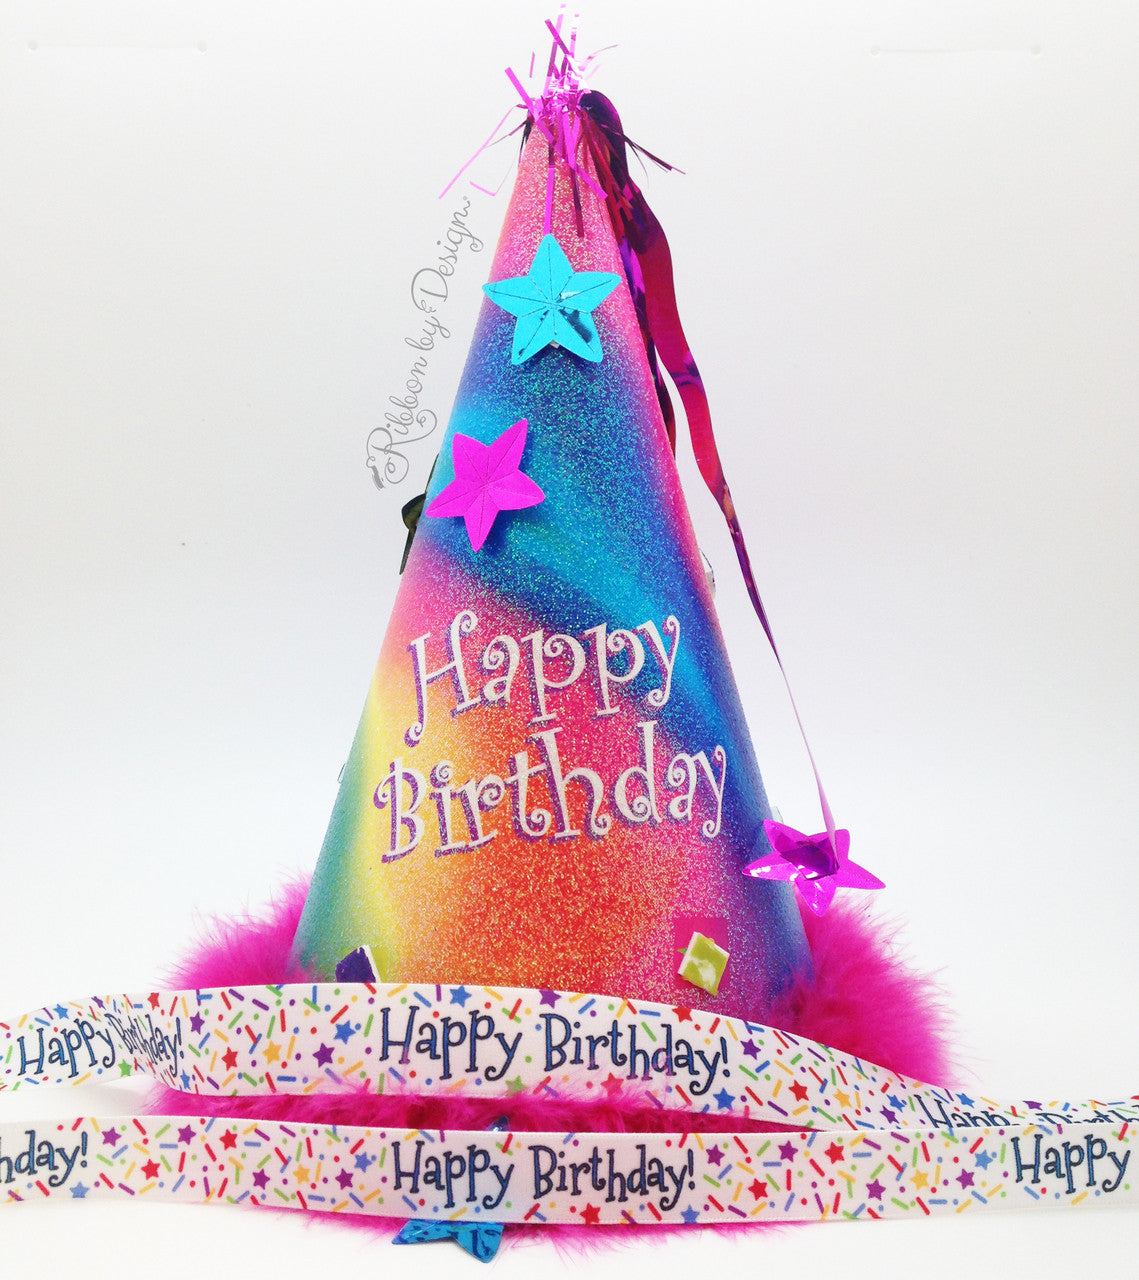 Happy Birthday Ribbon with Sprinkles on White 5/8" Single Face Satin Ribbon